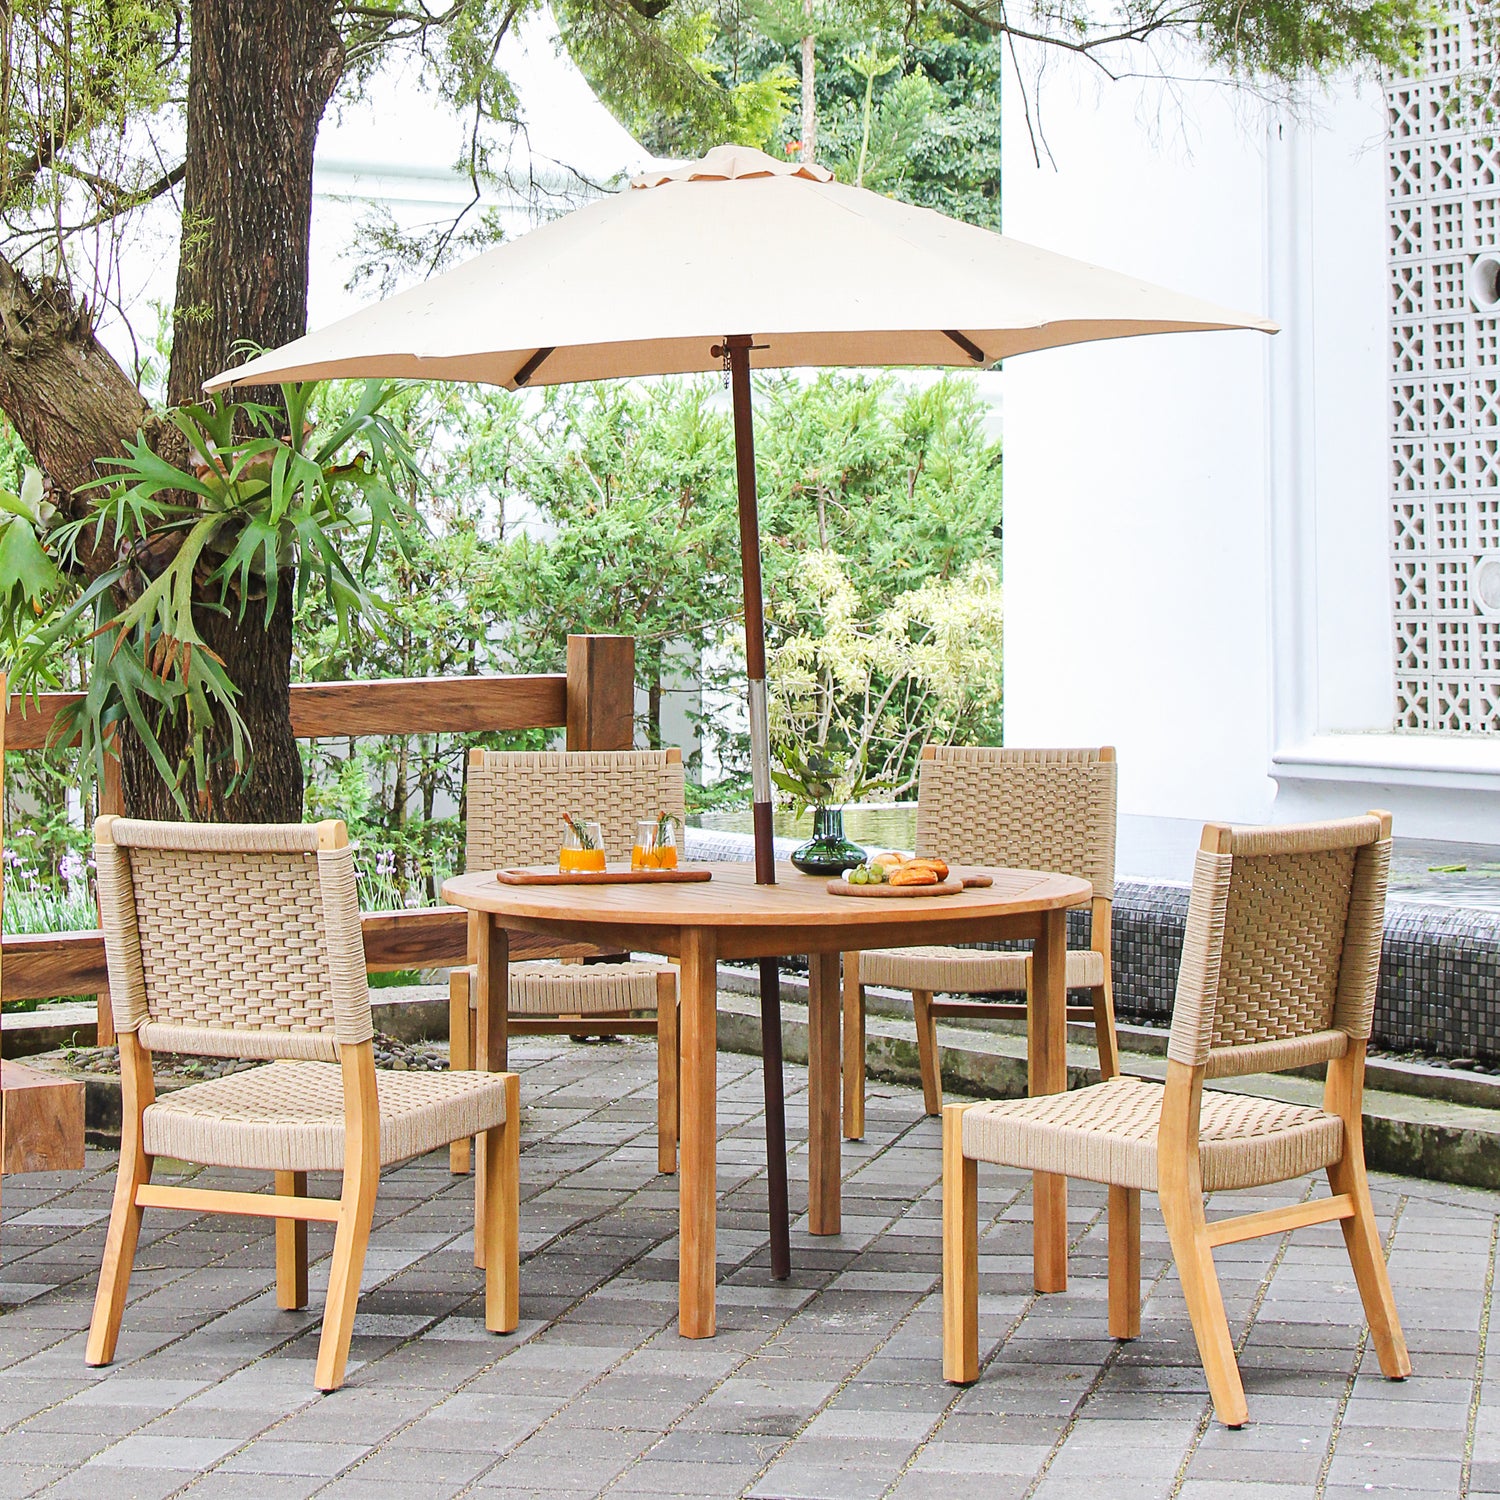 Zephyr 2 Piece Teak Wood Tan Outdoor Dining Chair